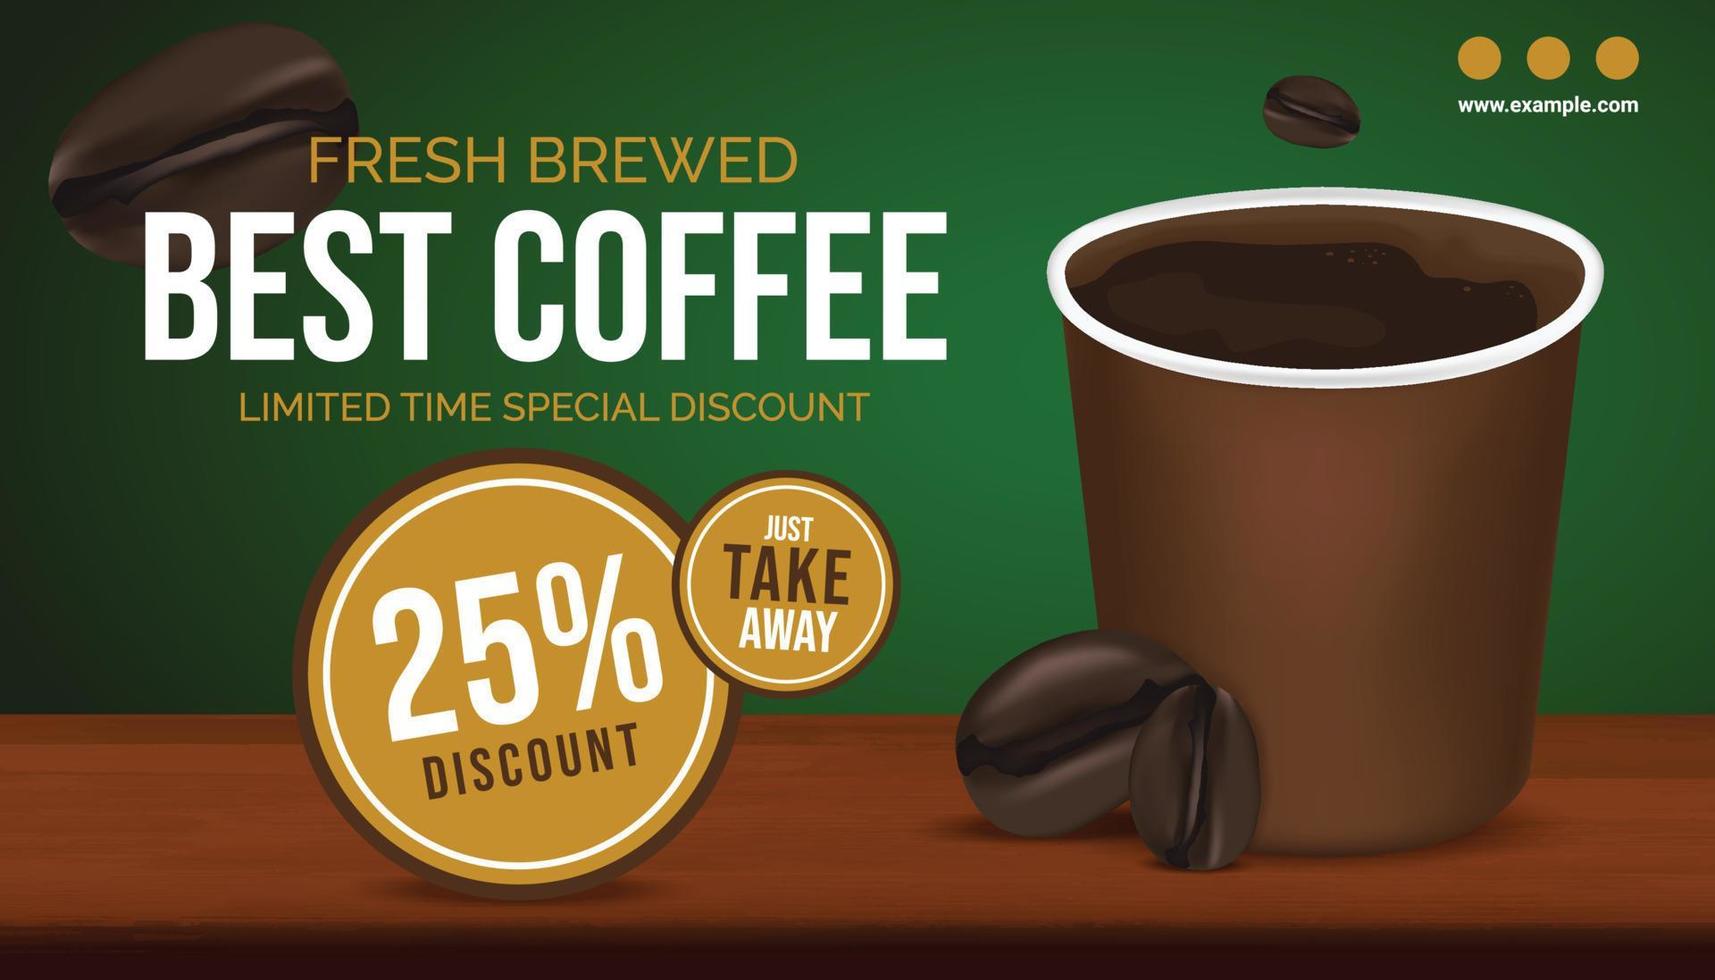 Takeaway Coffee advert banner template vector